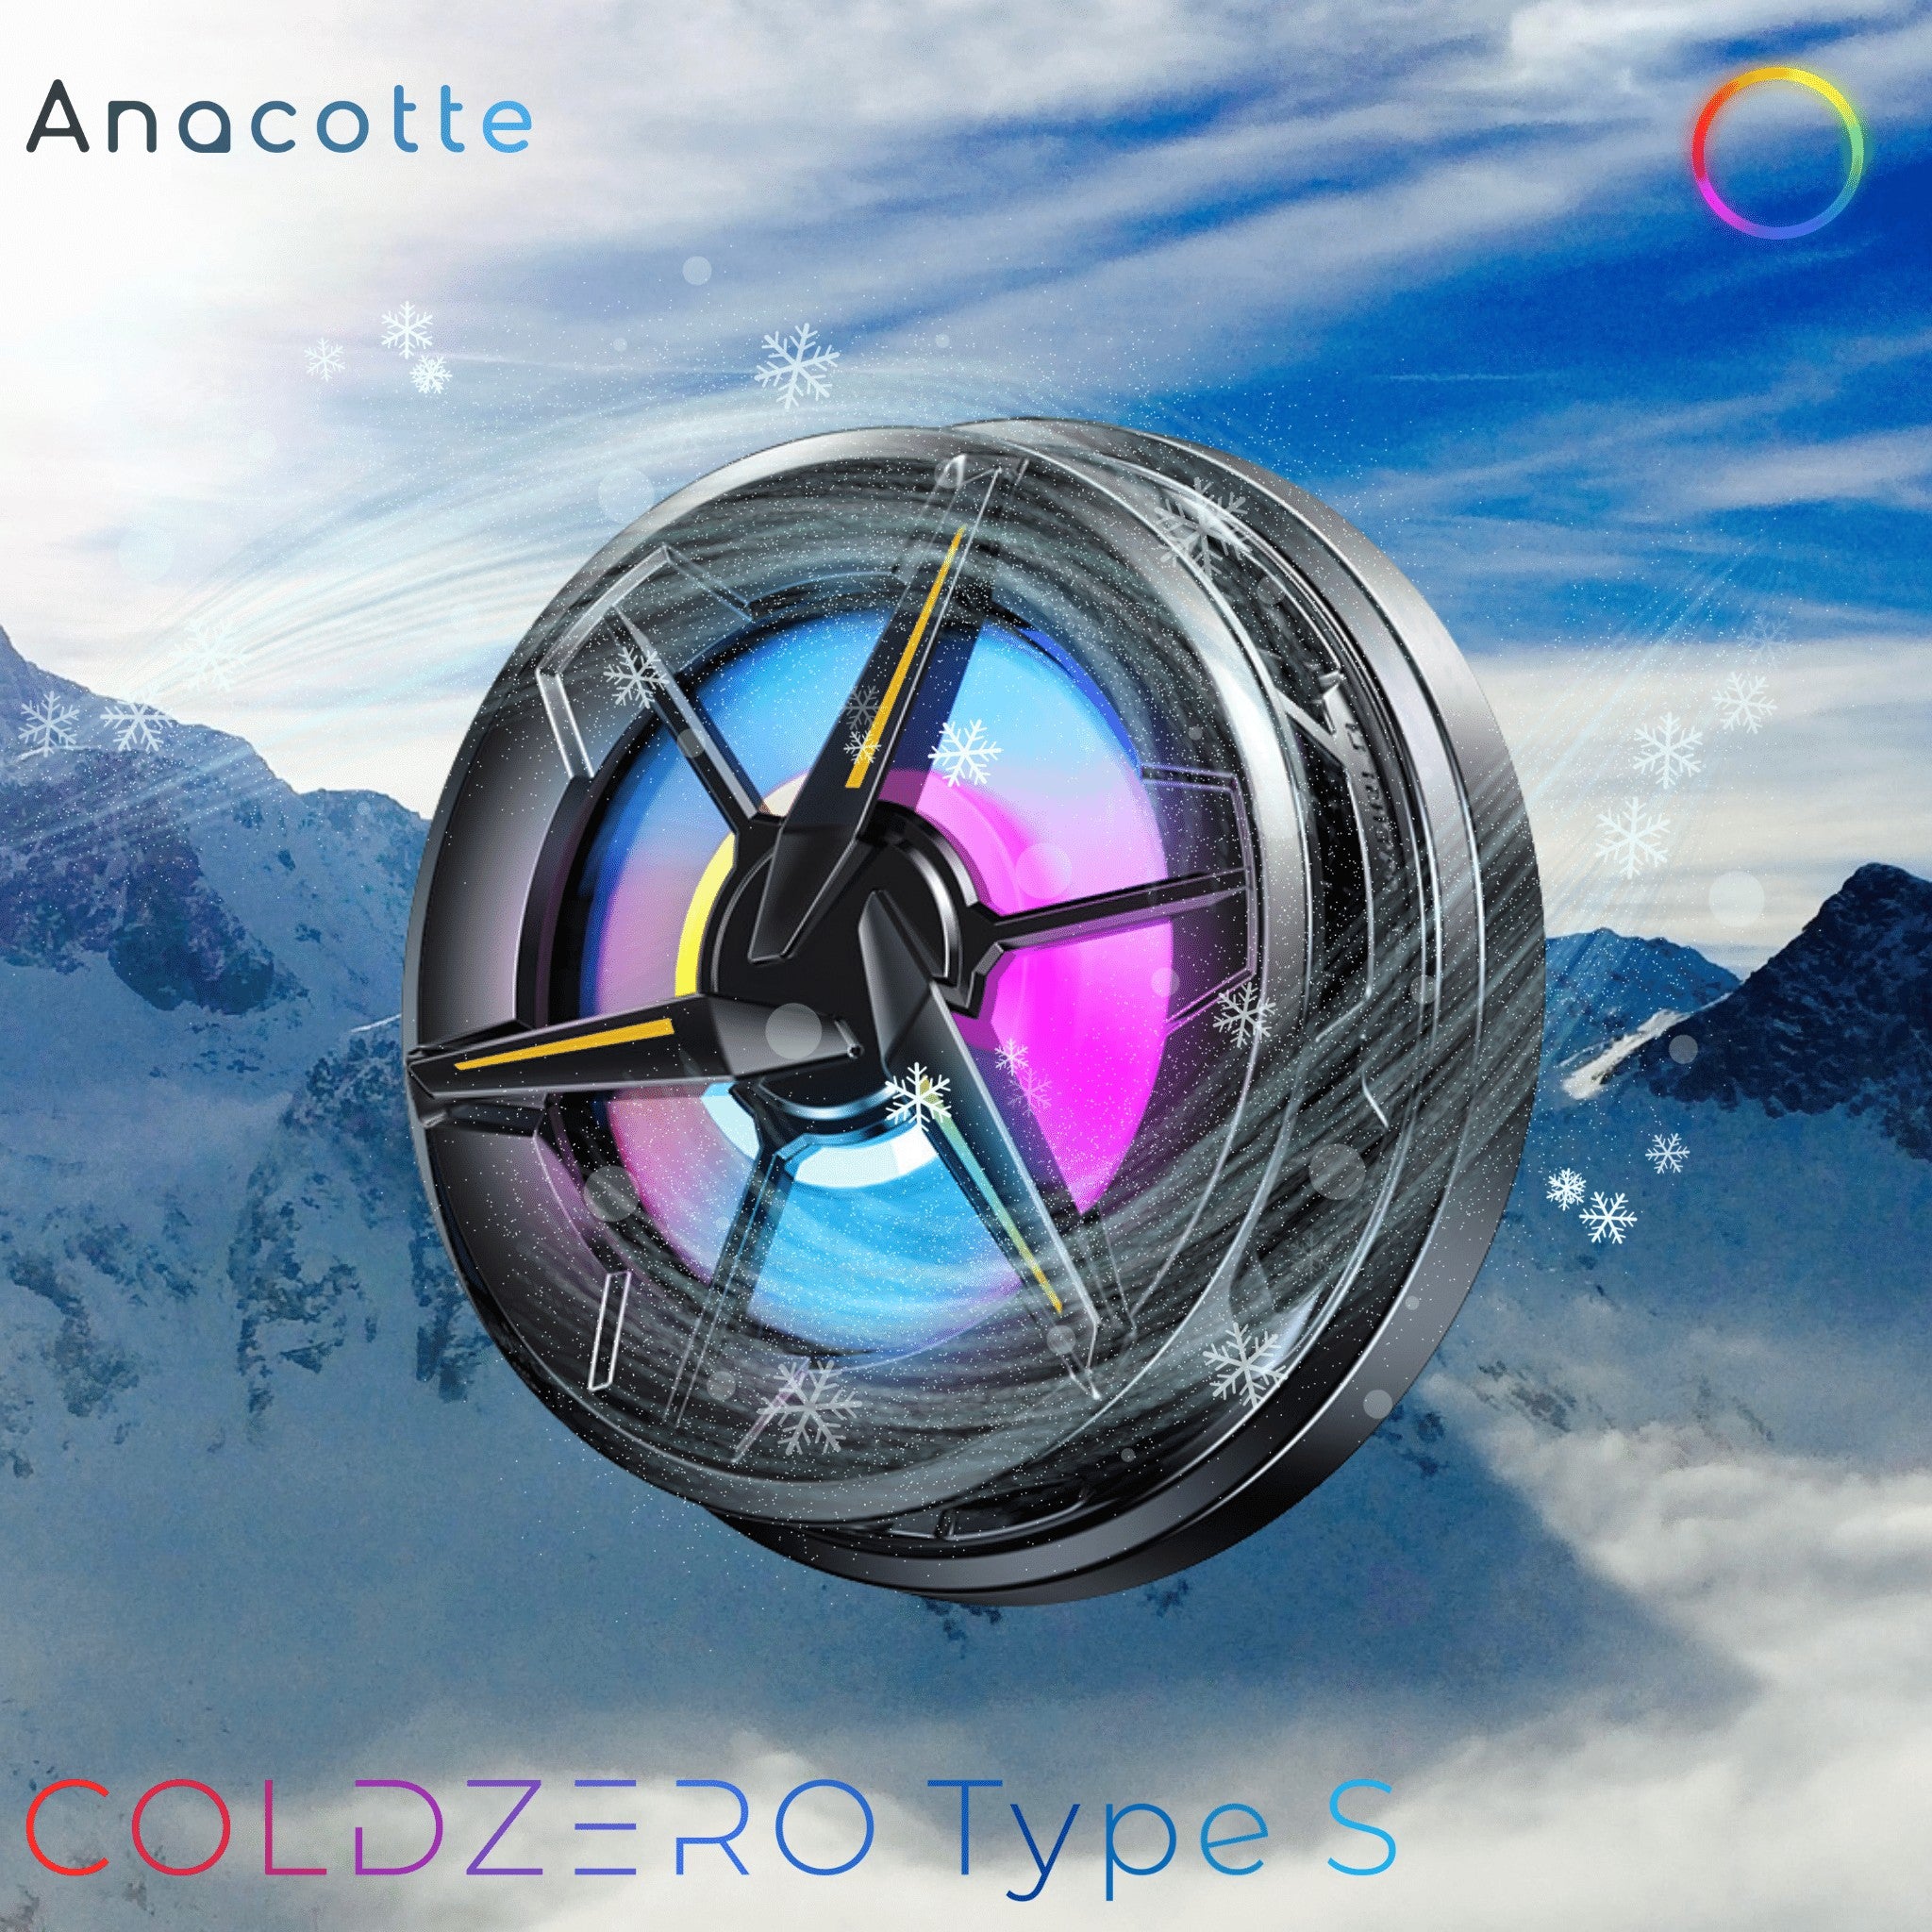 Anacotte Coldzero Type S Phone Cooler Radiator Anacotte